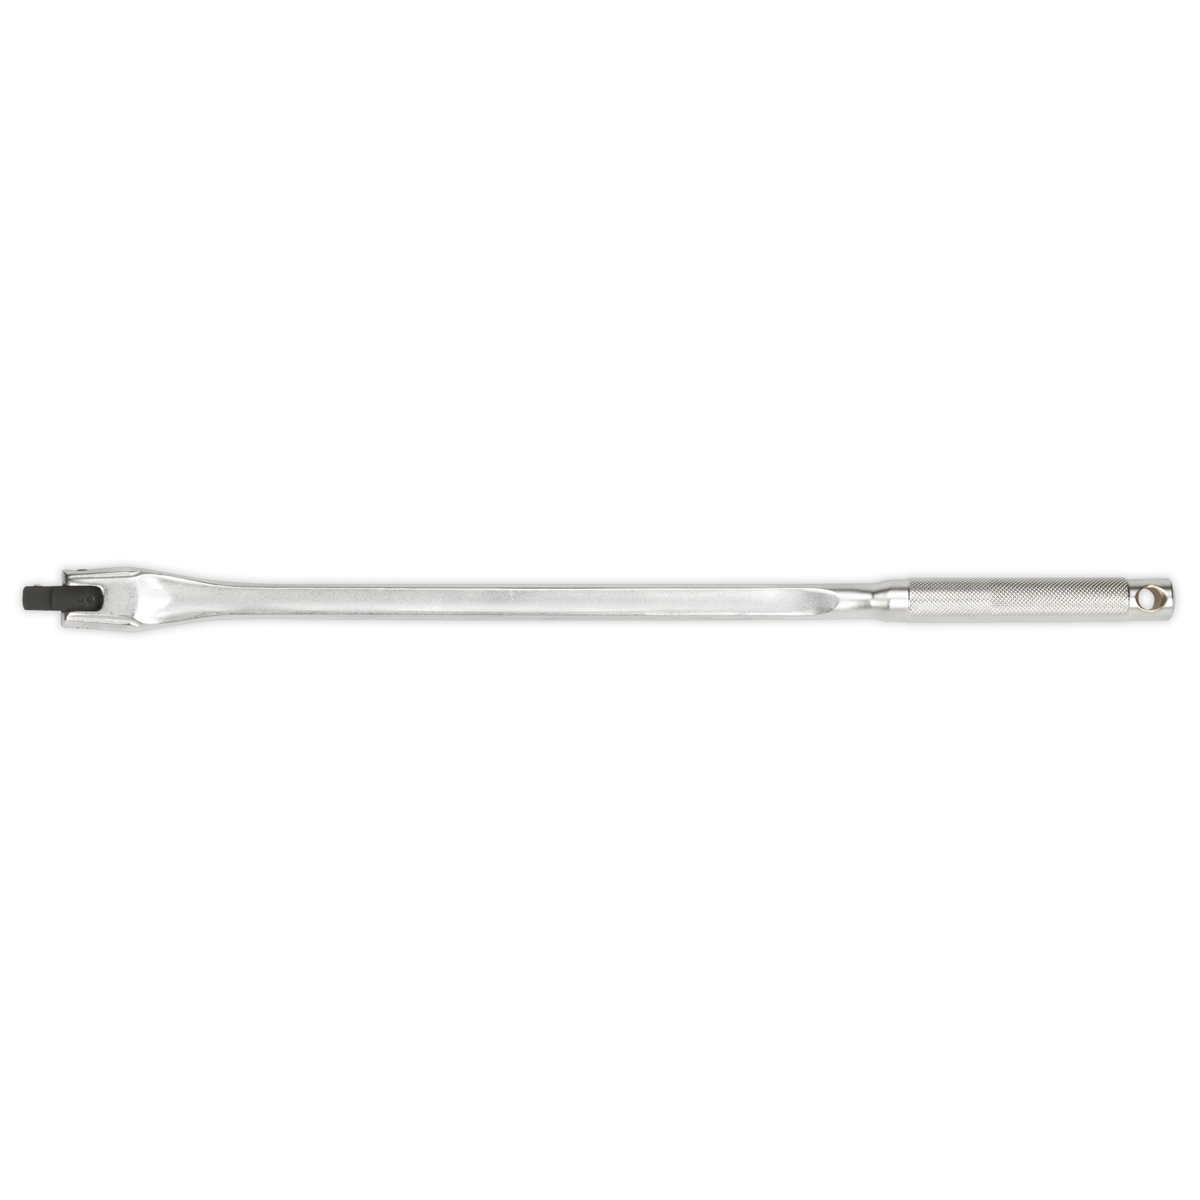 Breaker bar manufactured from hardened and tempered Chrome Vanadium steel